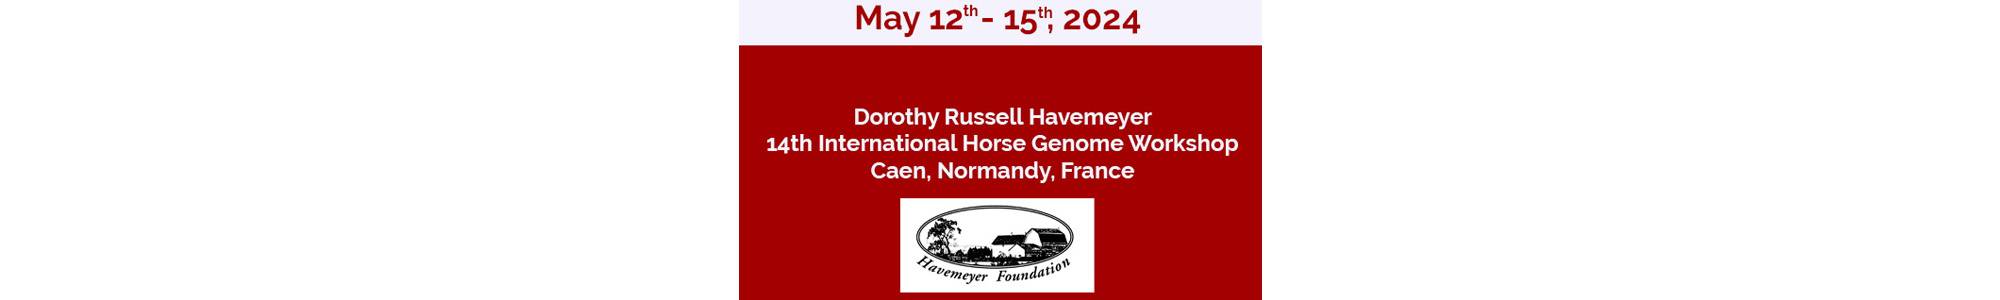 Dorothy Russell Havemeyer 14th International Horse Genome Workshop